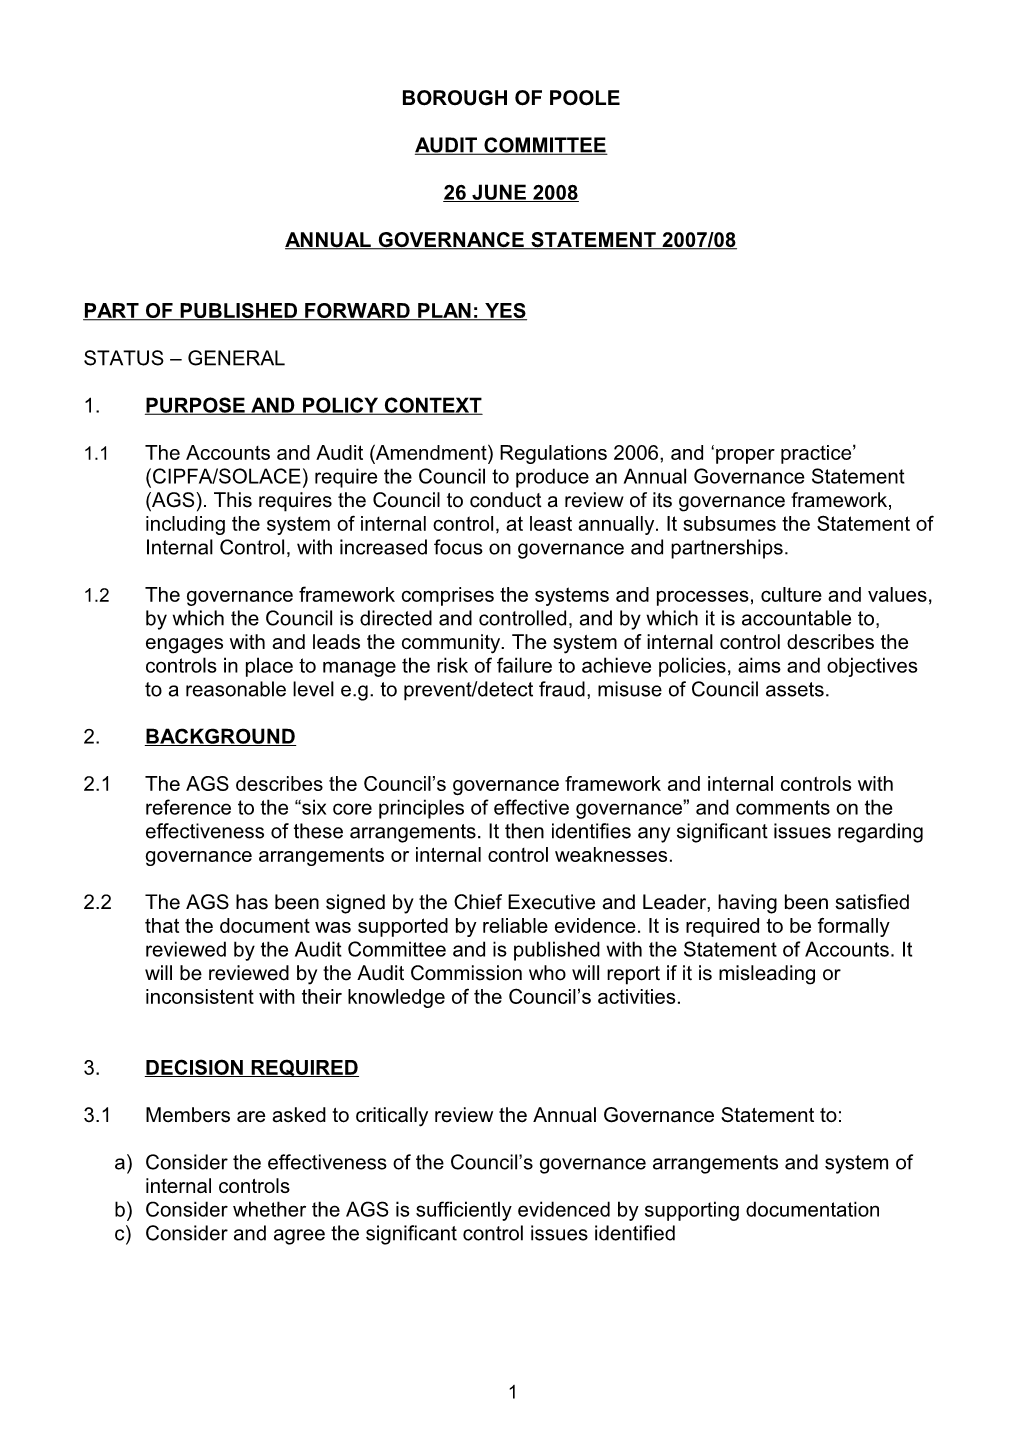 Annual Governance Statement 2007/08